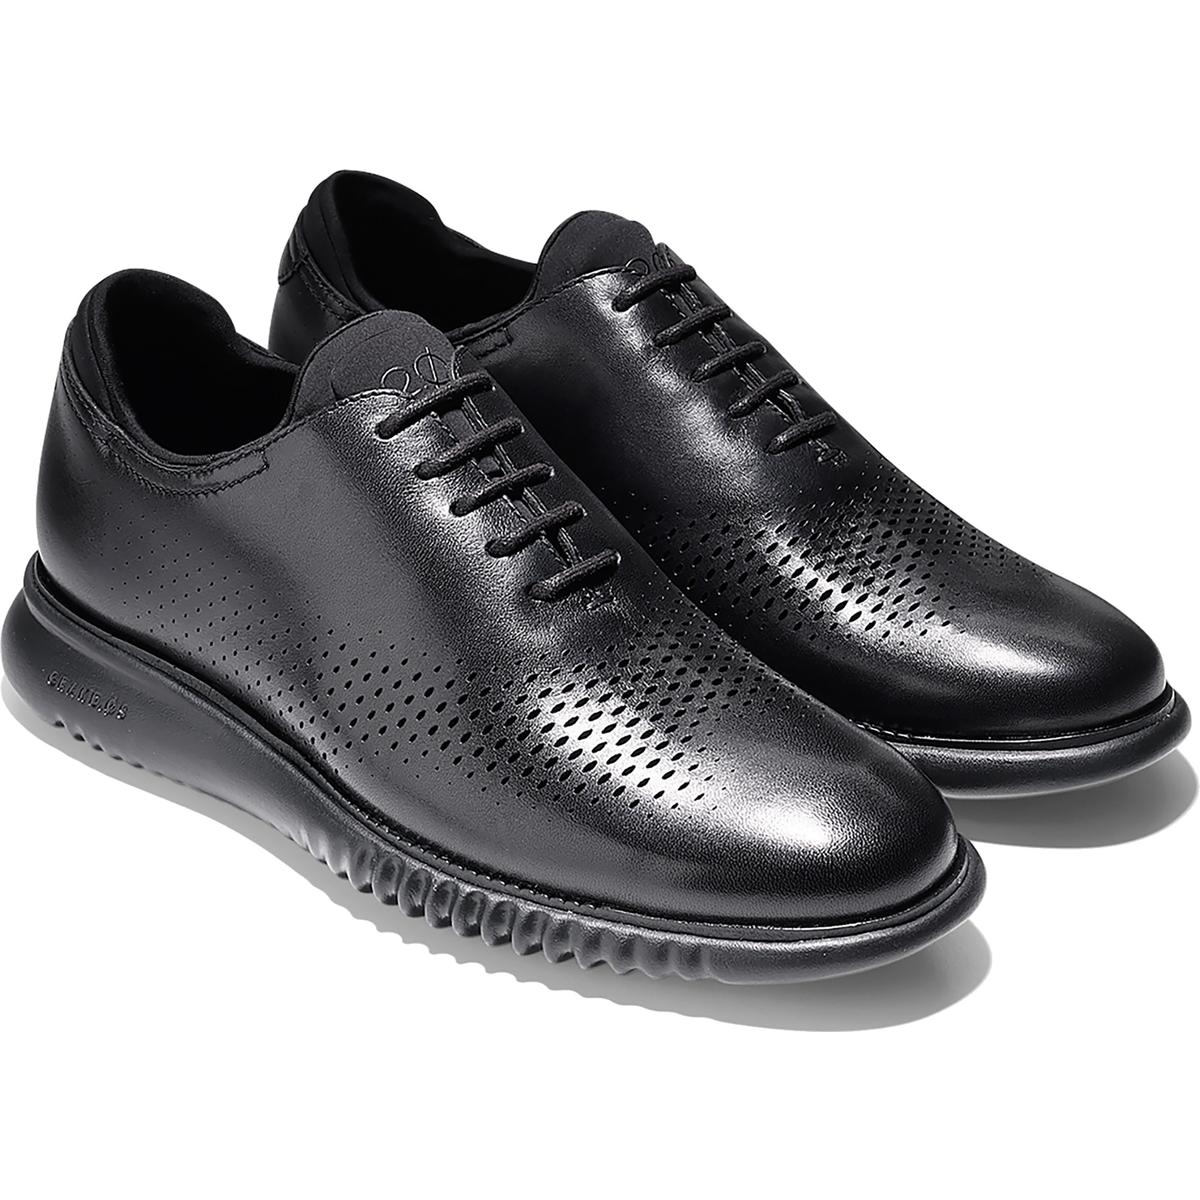 Cole Haan Mens 2 Zerogrand Black Leather Oxfords Shoes 11 Medium (D ...